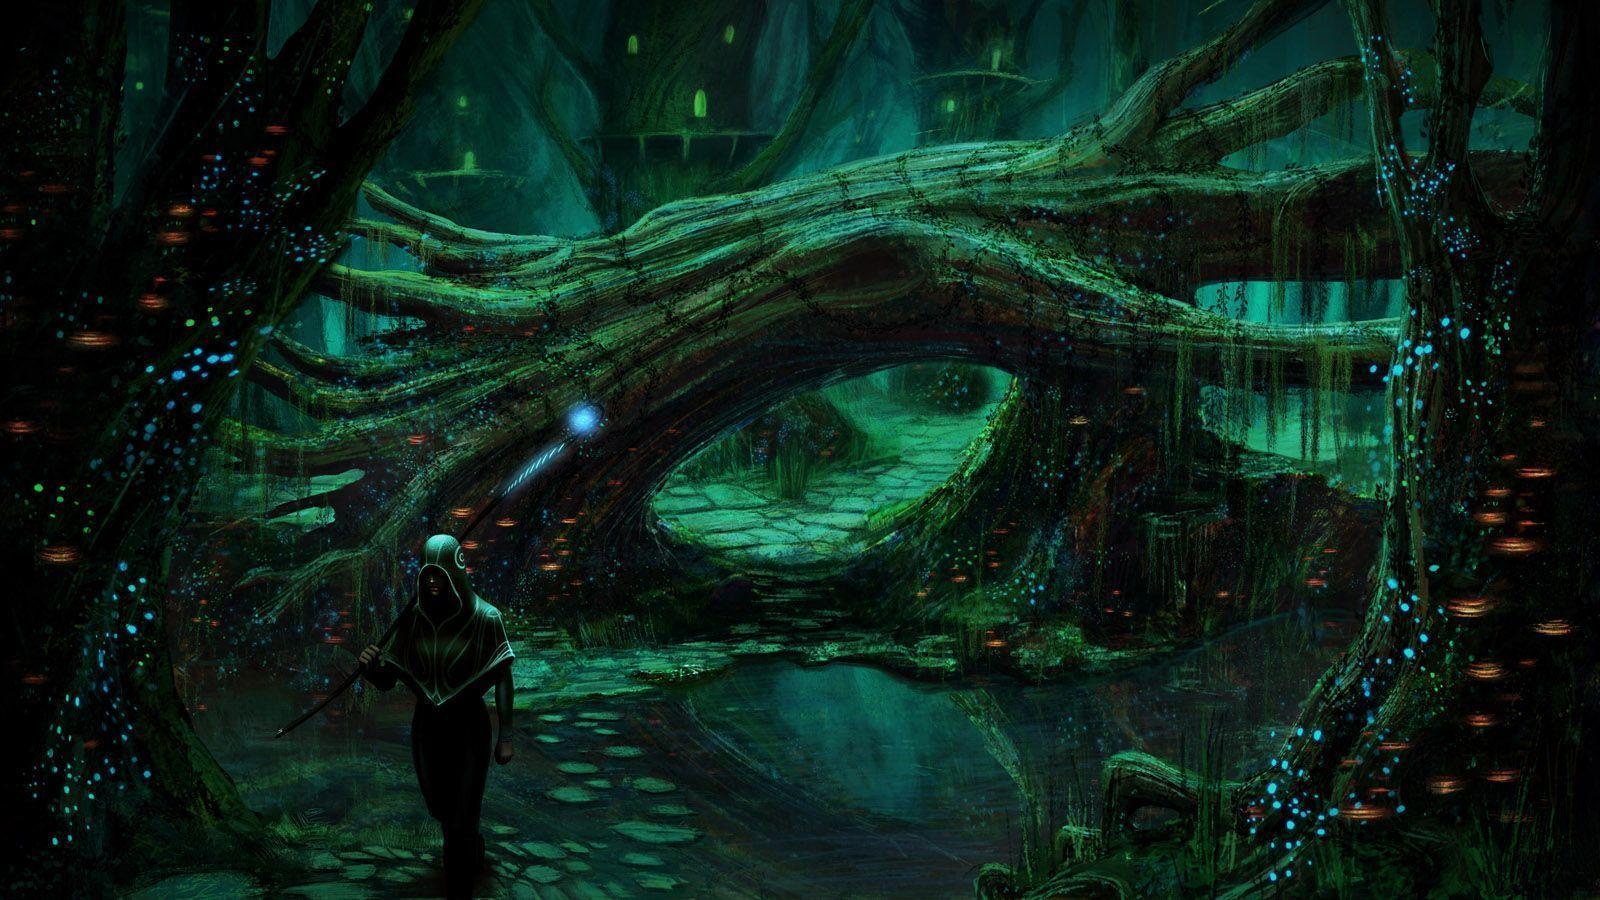 Druid forest